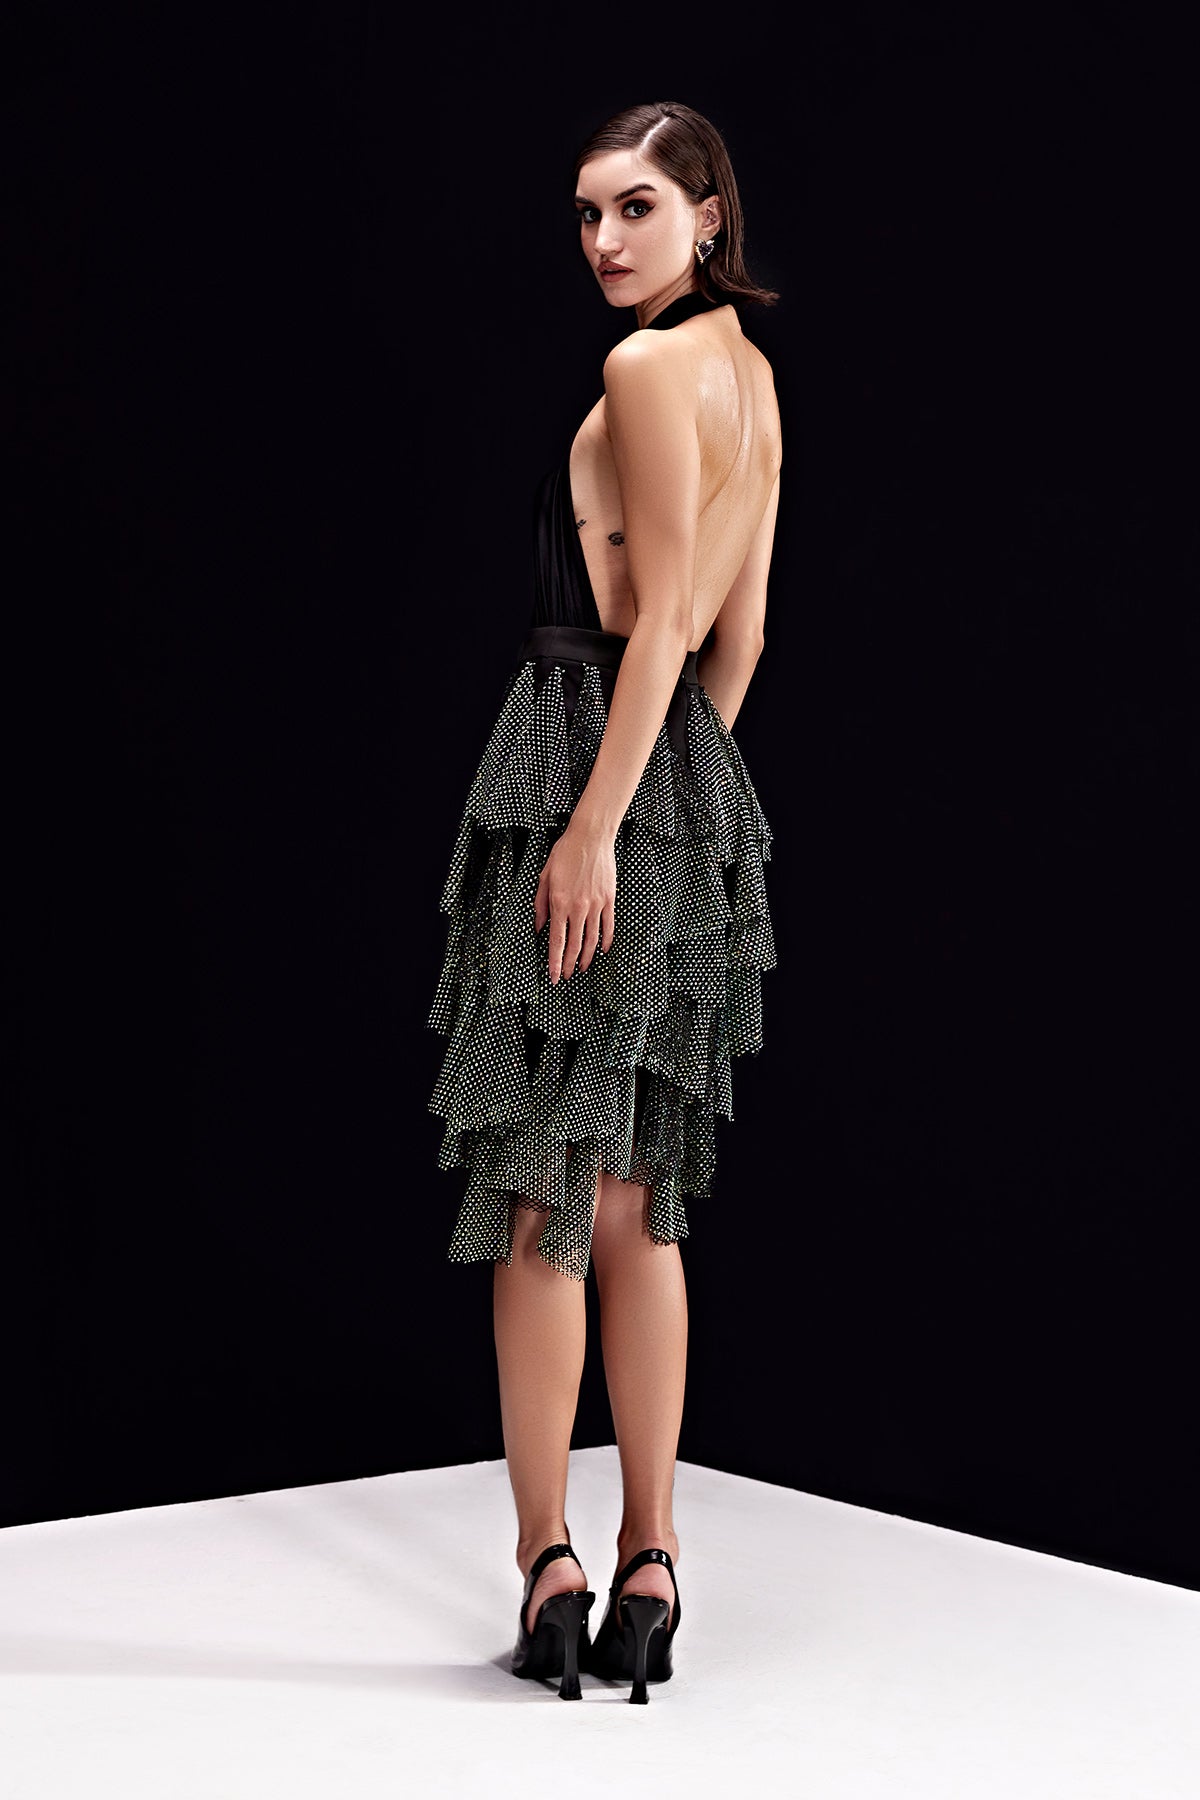 Casa-Reflect Rhinestone Skirt With Cross-Neck Top